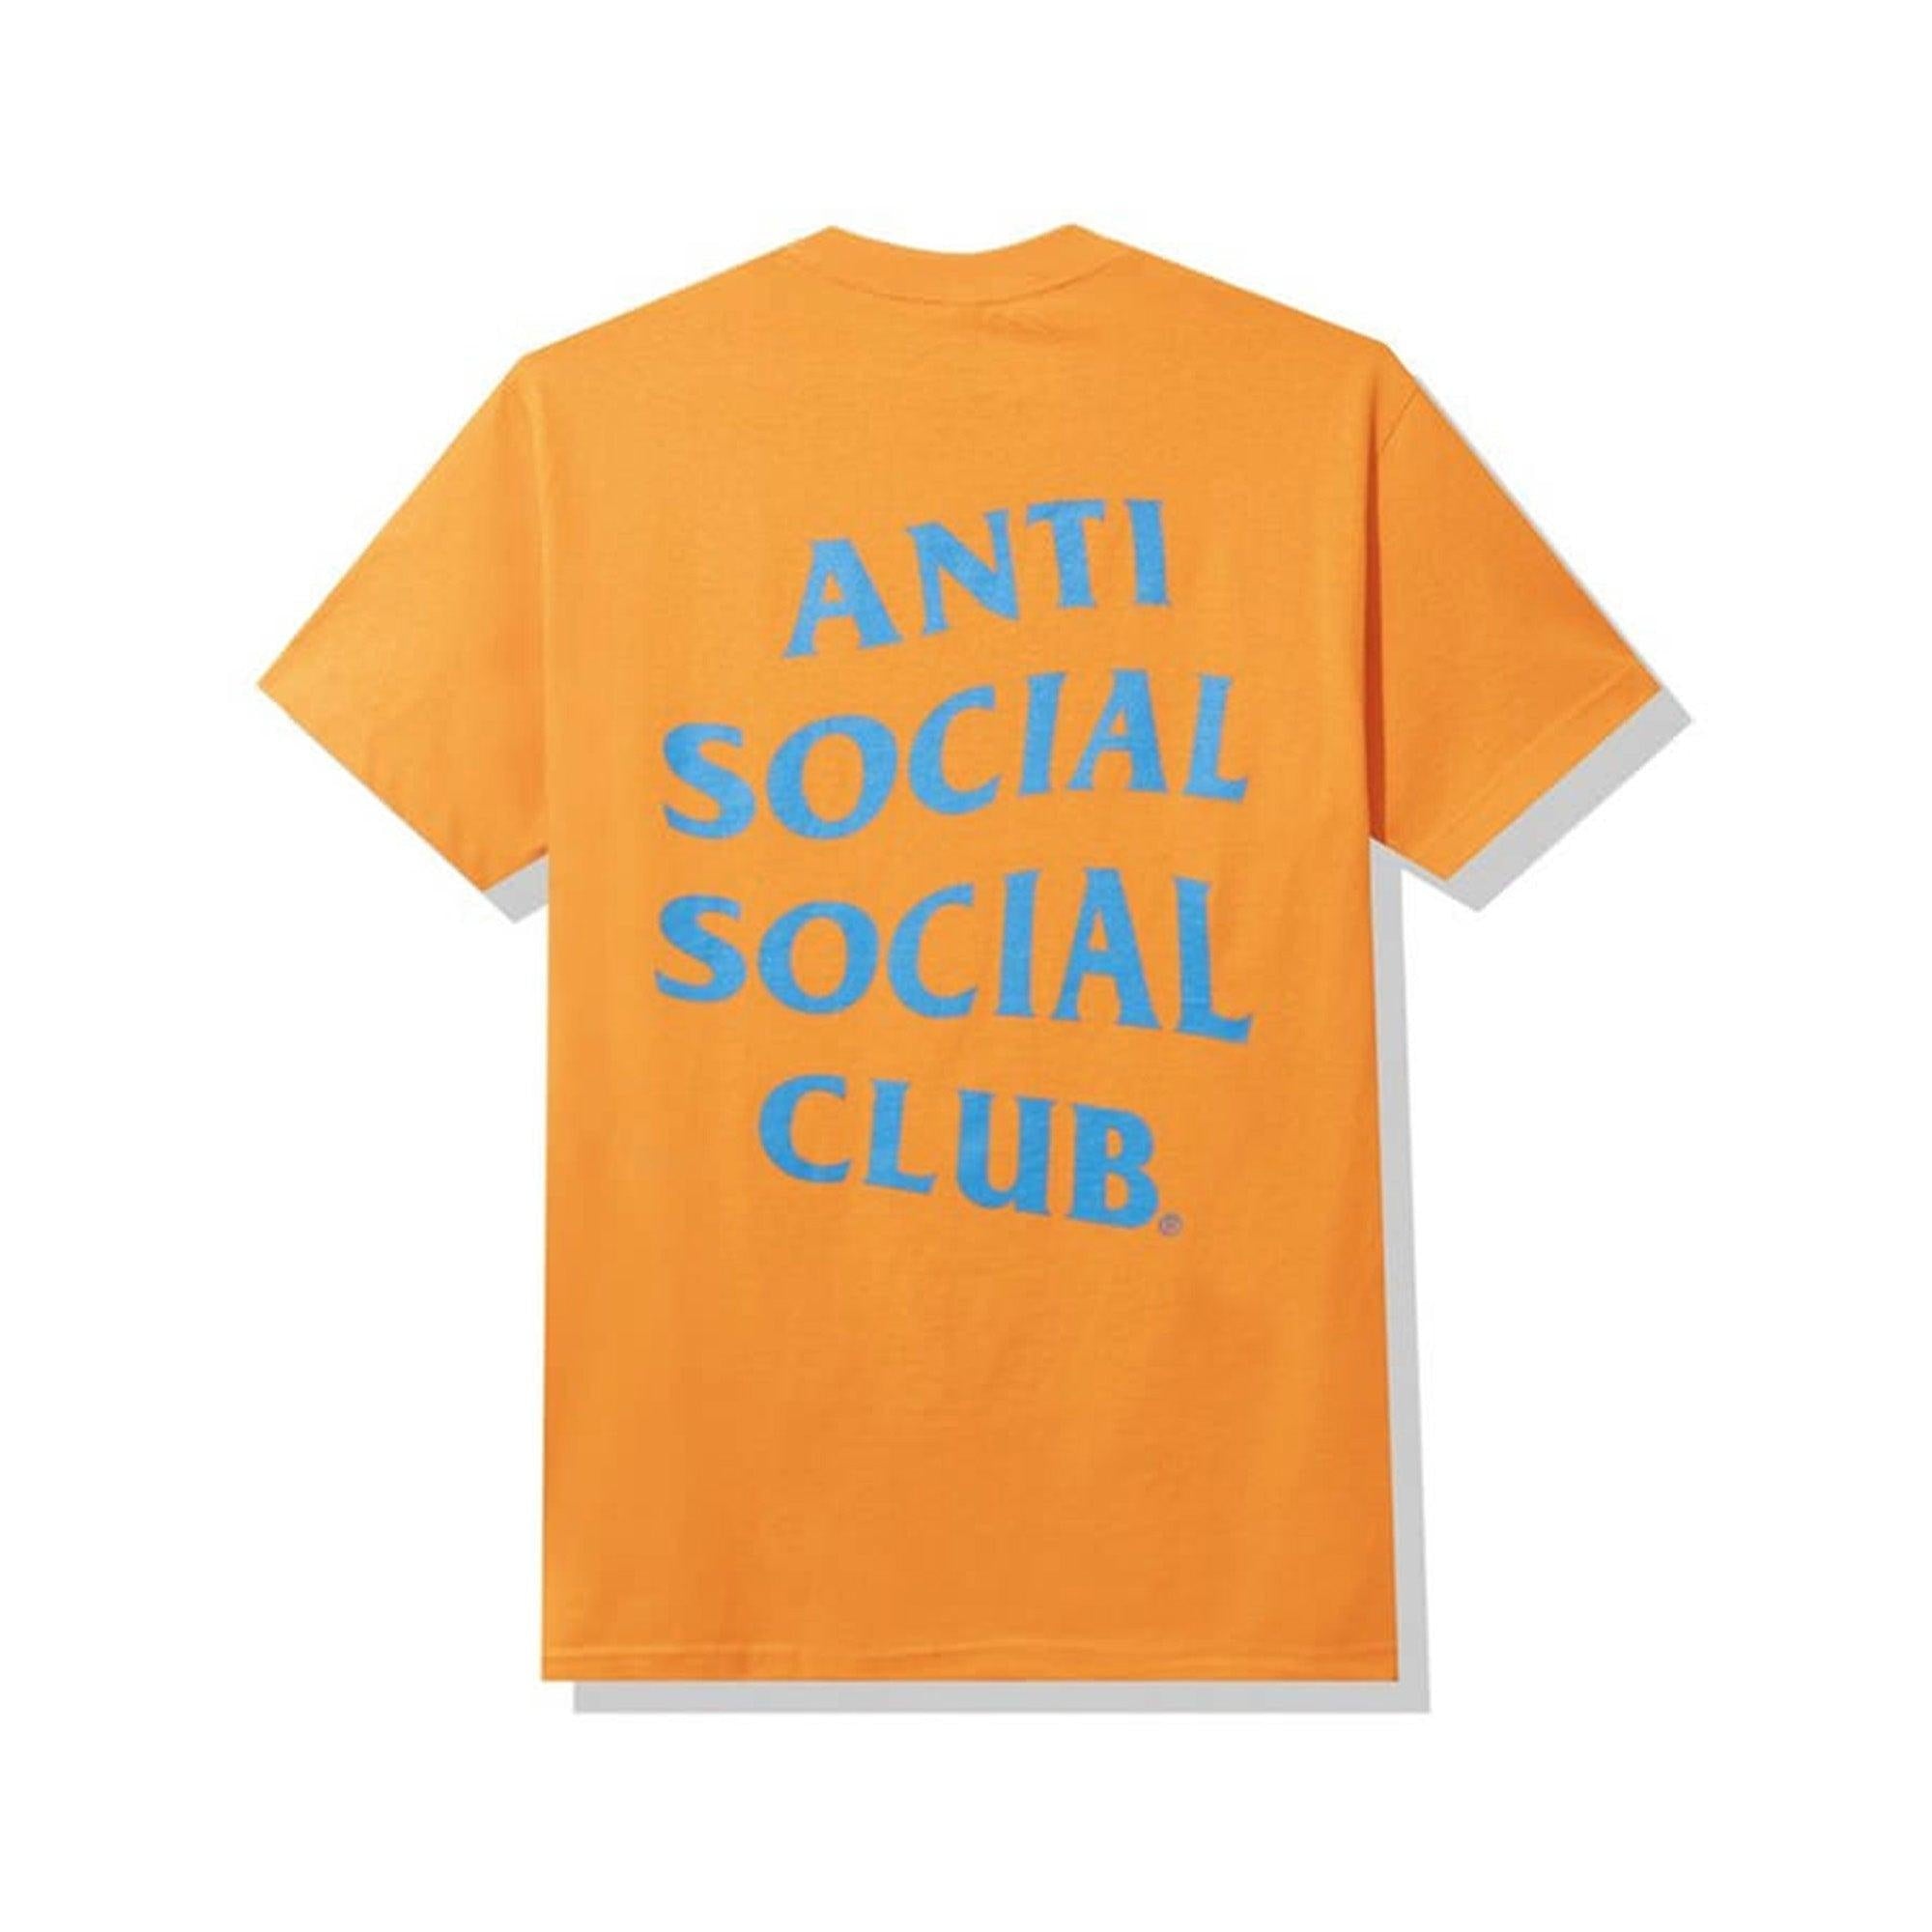 Buy Anti Social Social Club SD Orange Tee Online